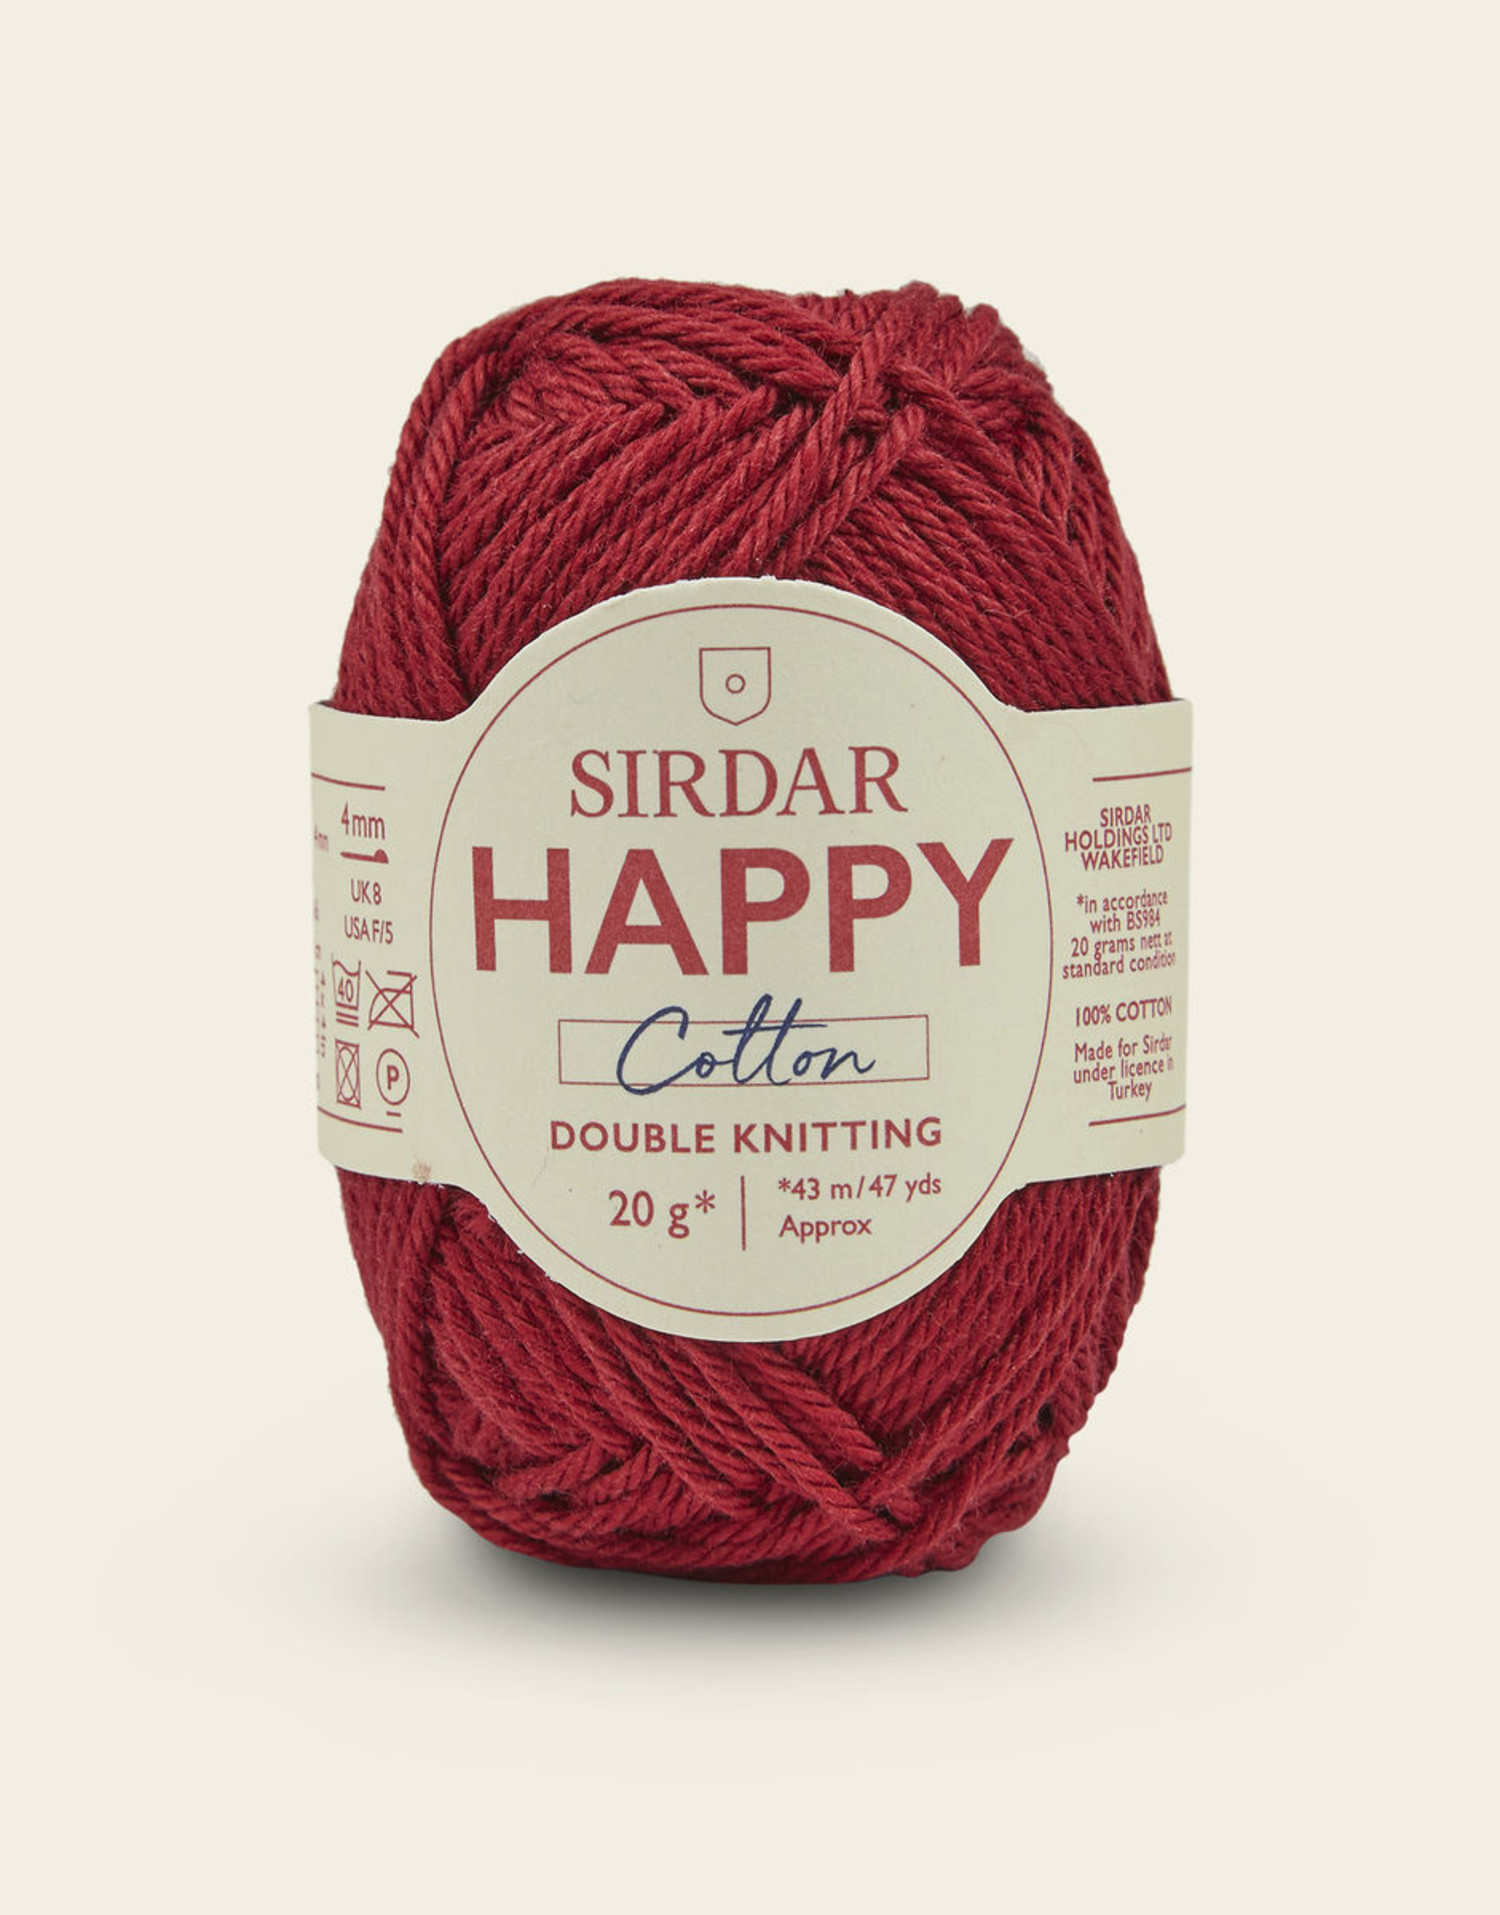 Sirdar Happy Cotton Crochet Amigurami Pattern Booklet 9 - Baby Love for  sale online